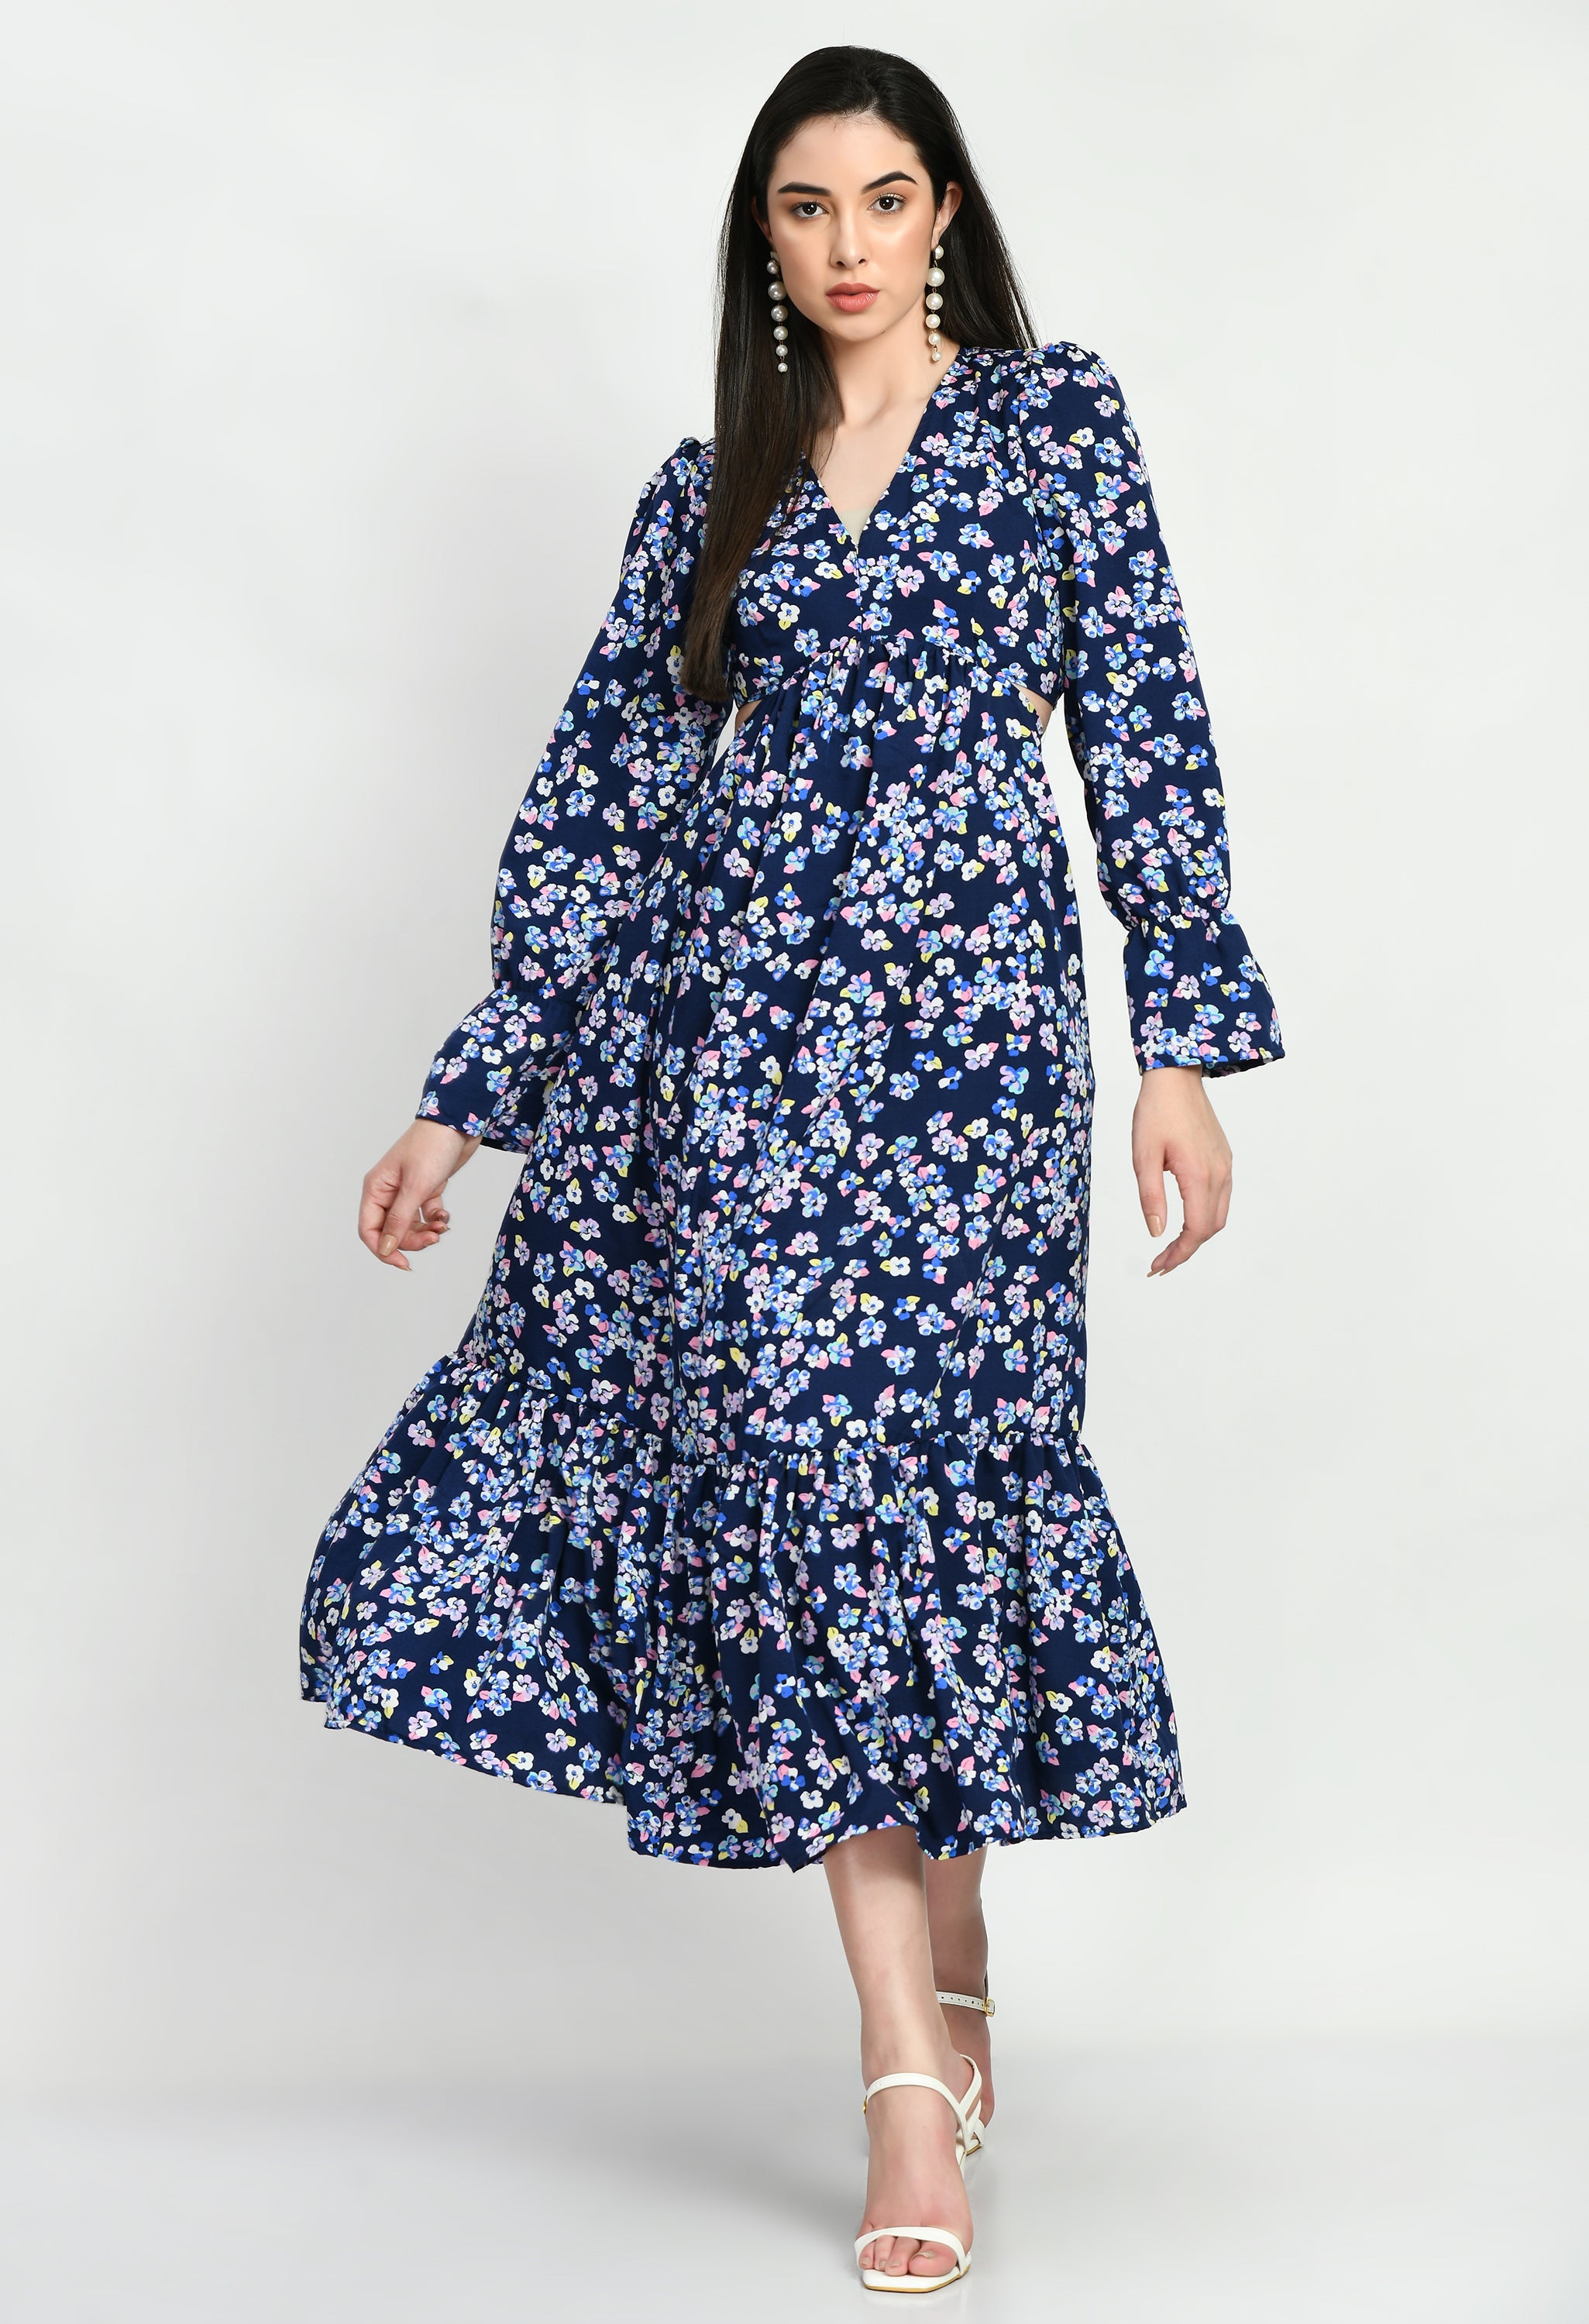 STYLZ Deep Blue A-Line Floral Dress